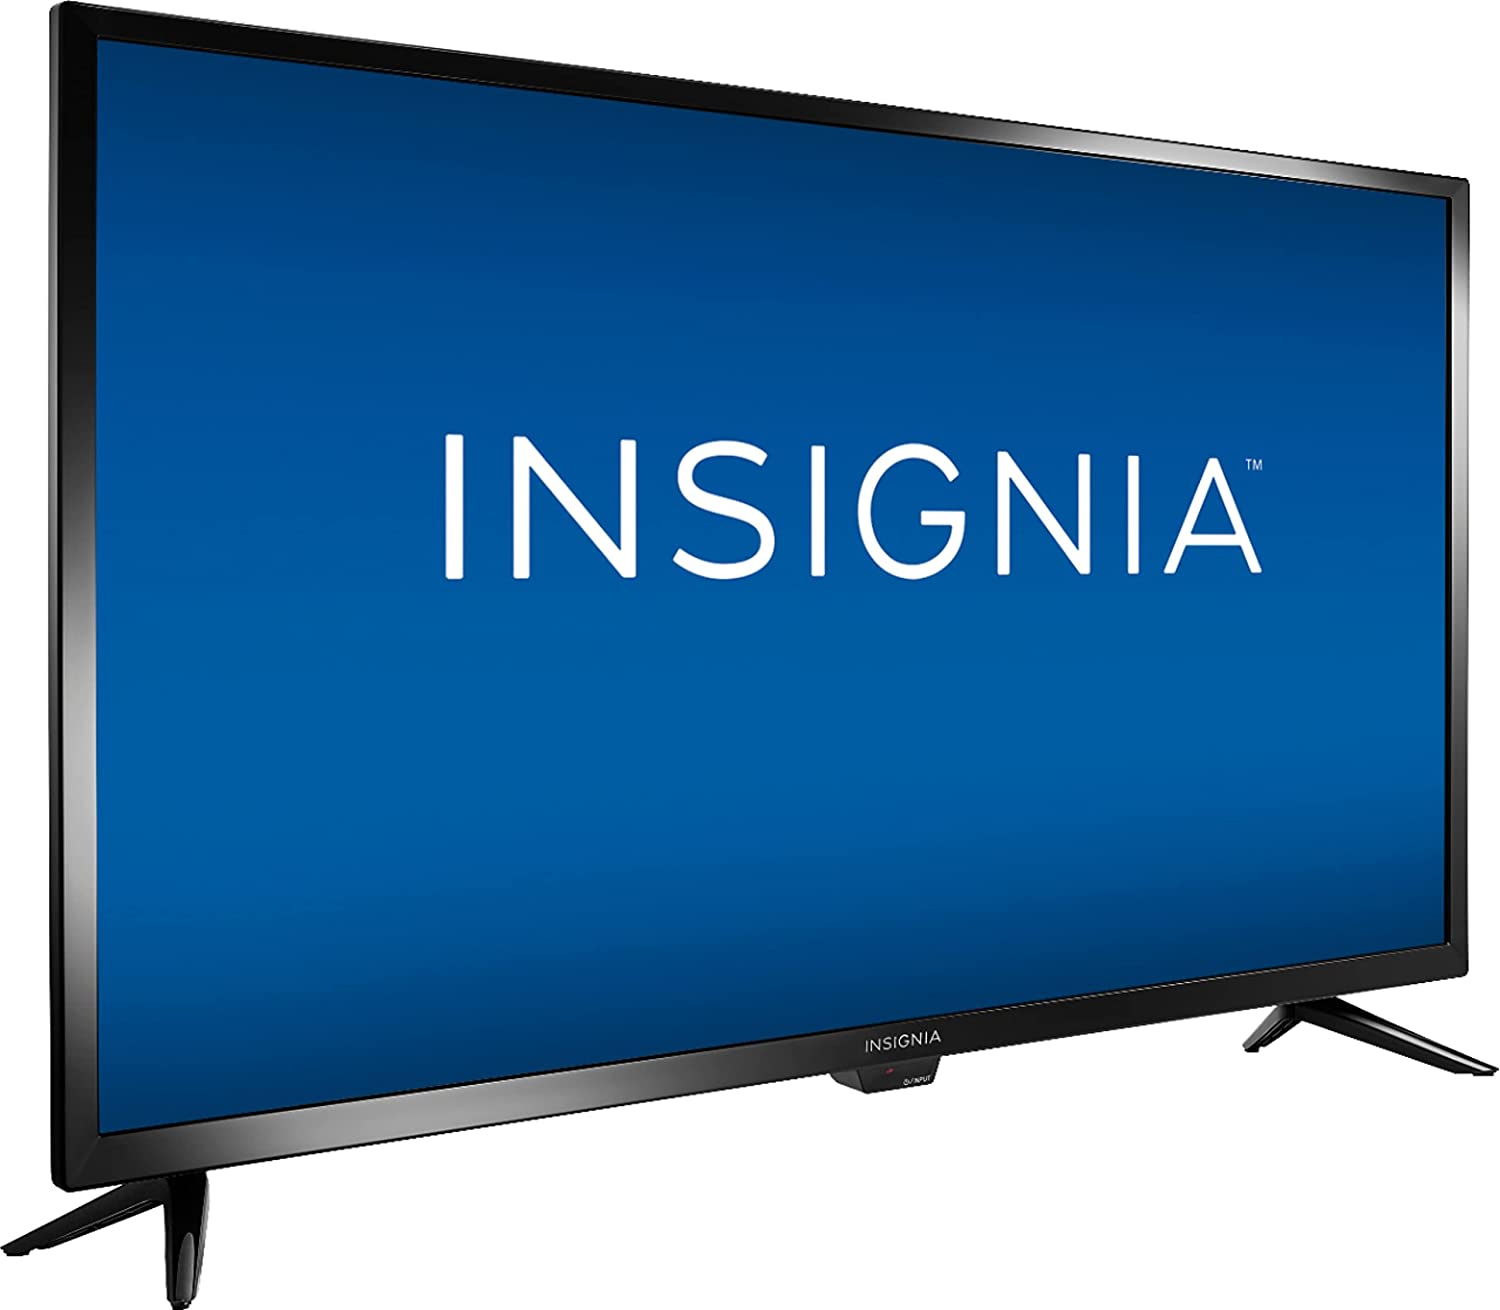 Insignia - 32" Class F20 Series LED HD Smart Fire TV